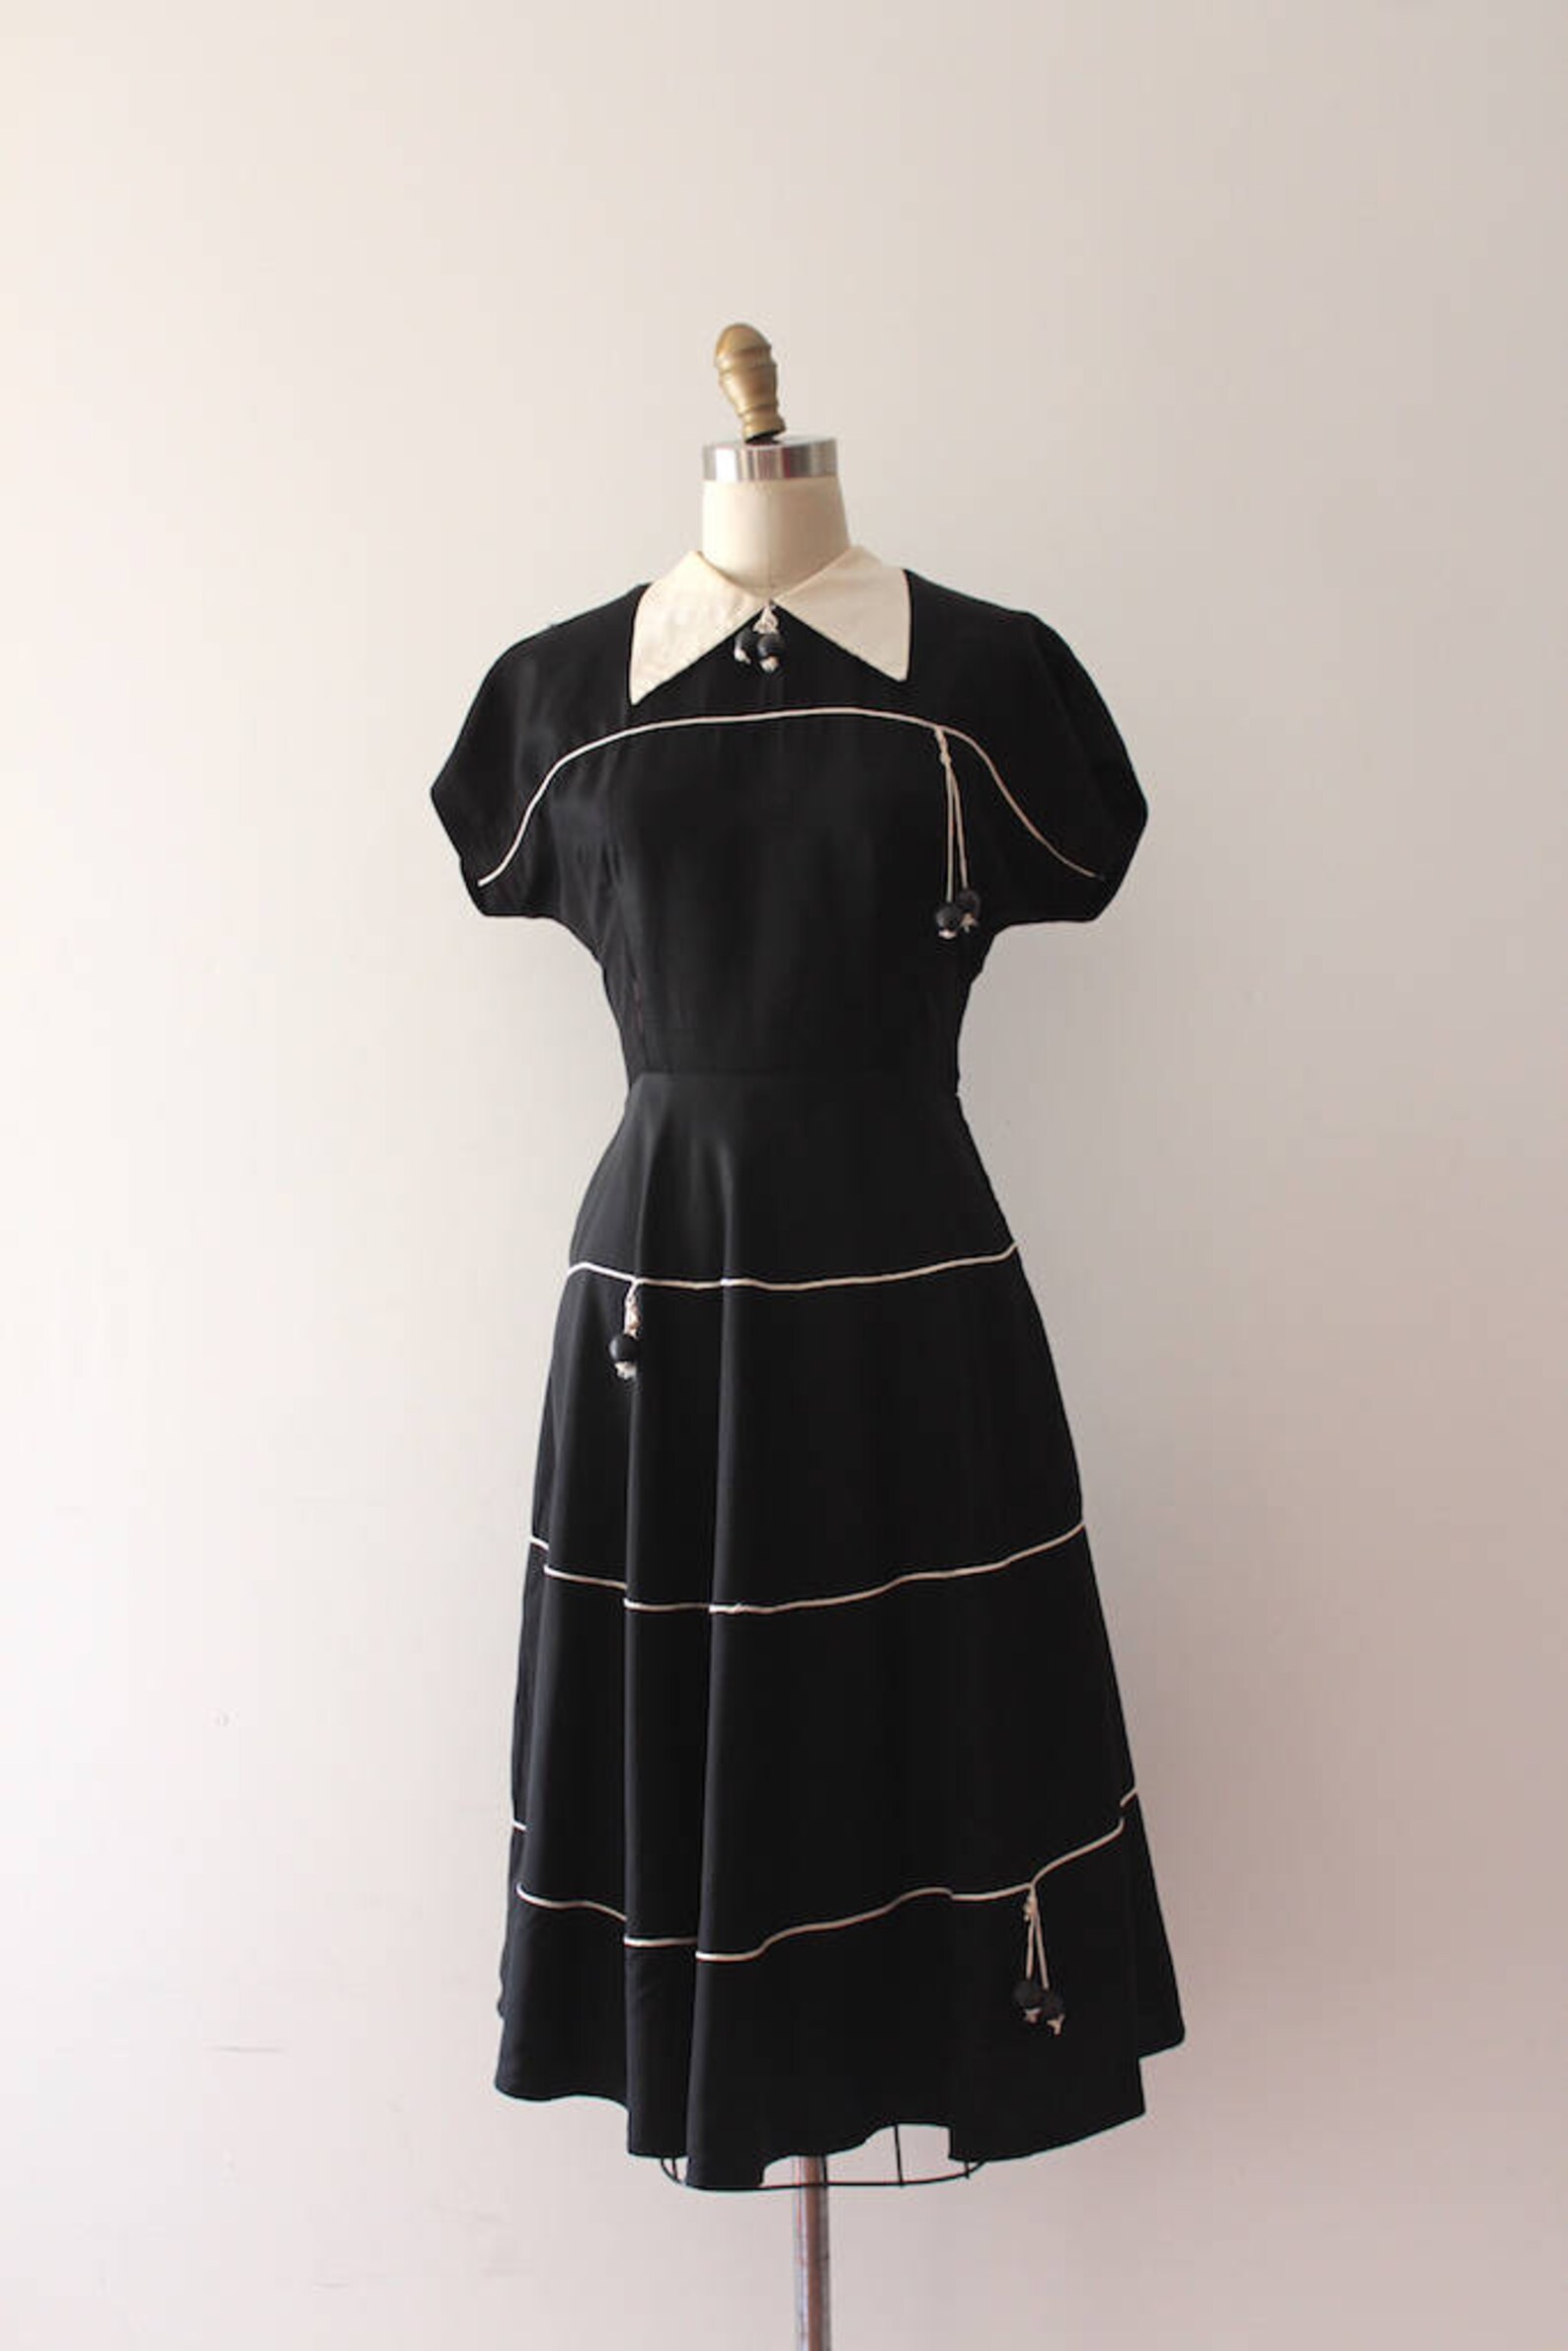 Vintage 1940s dress // 40s black dress as is | Etsy